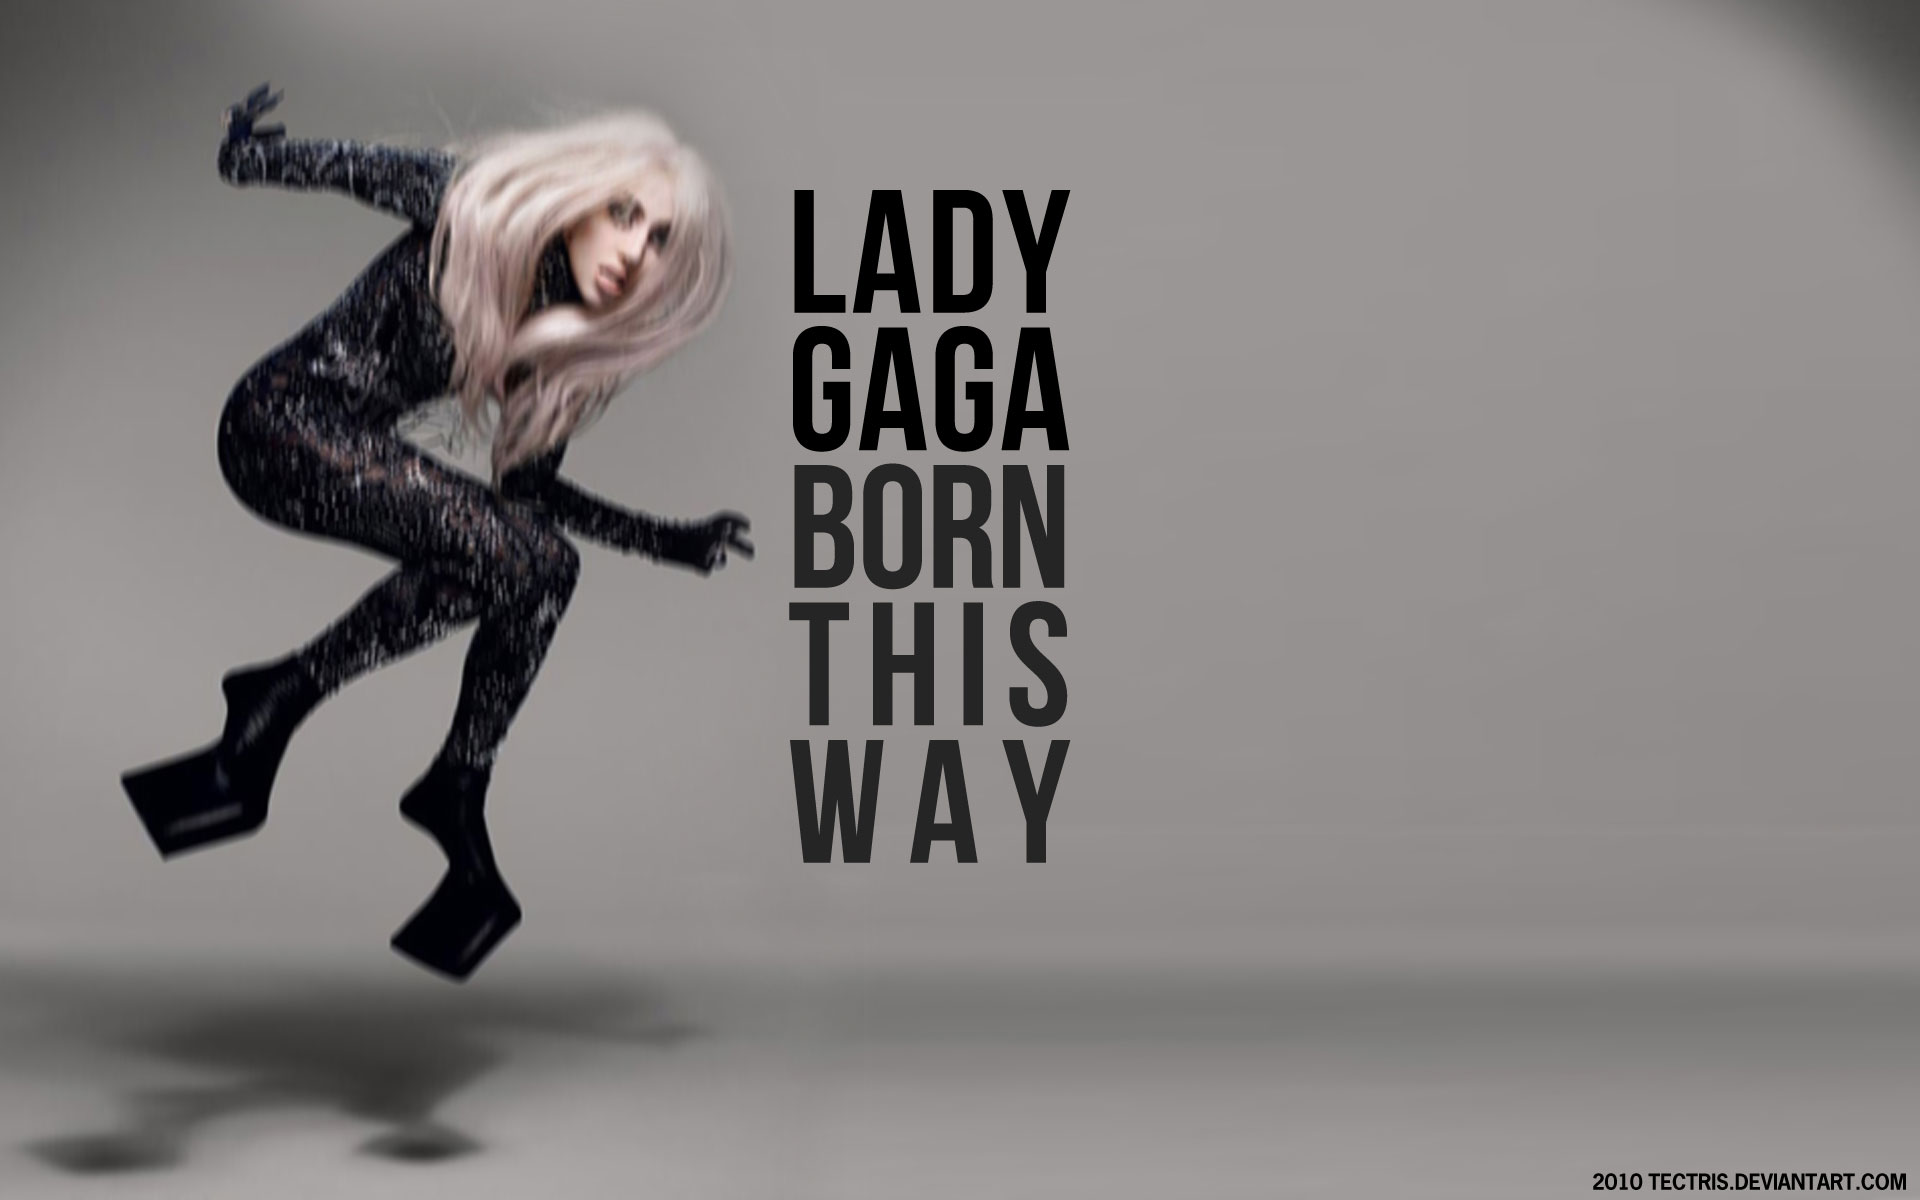 Lady gaga born this. Леди Гага Борн ЗИС Вэй. Леди Гага Постер. Леди Гага плакат. Born this way альбом.